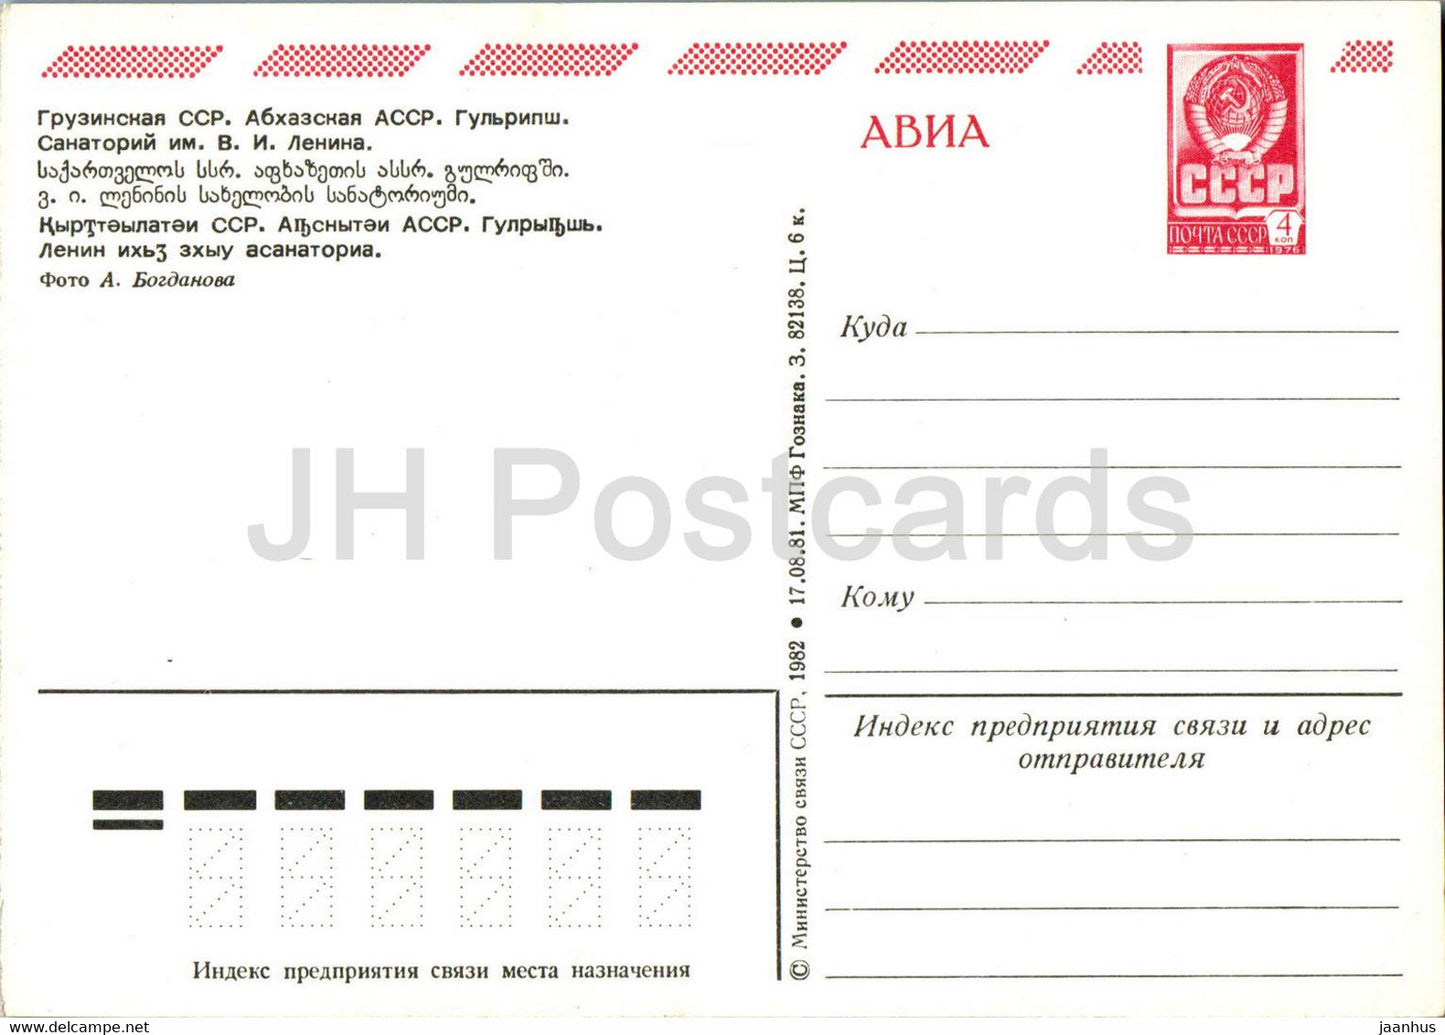 Gulripshi - Gulripsh - Lenin sanatorium - postal stationery - 1982 - Georgia USSR - unused